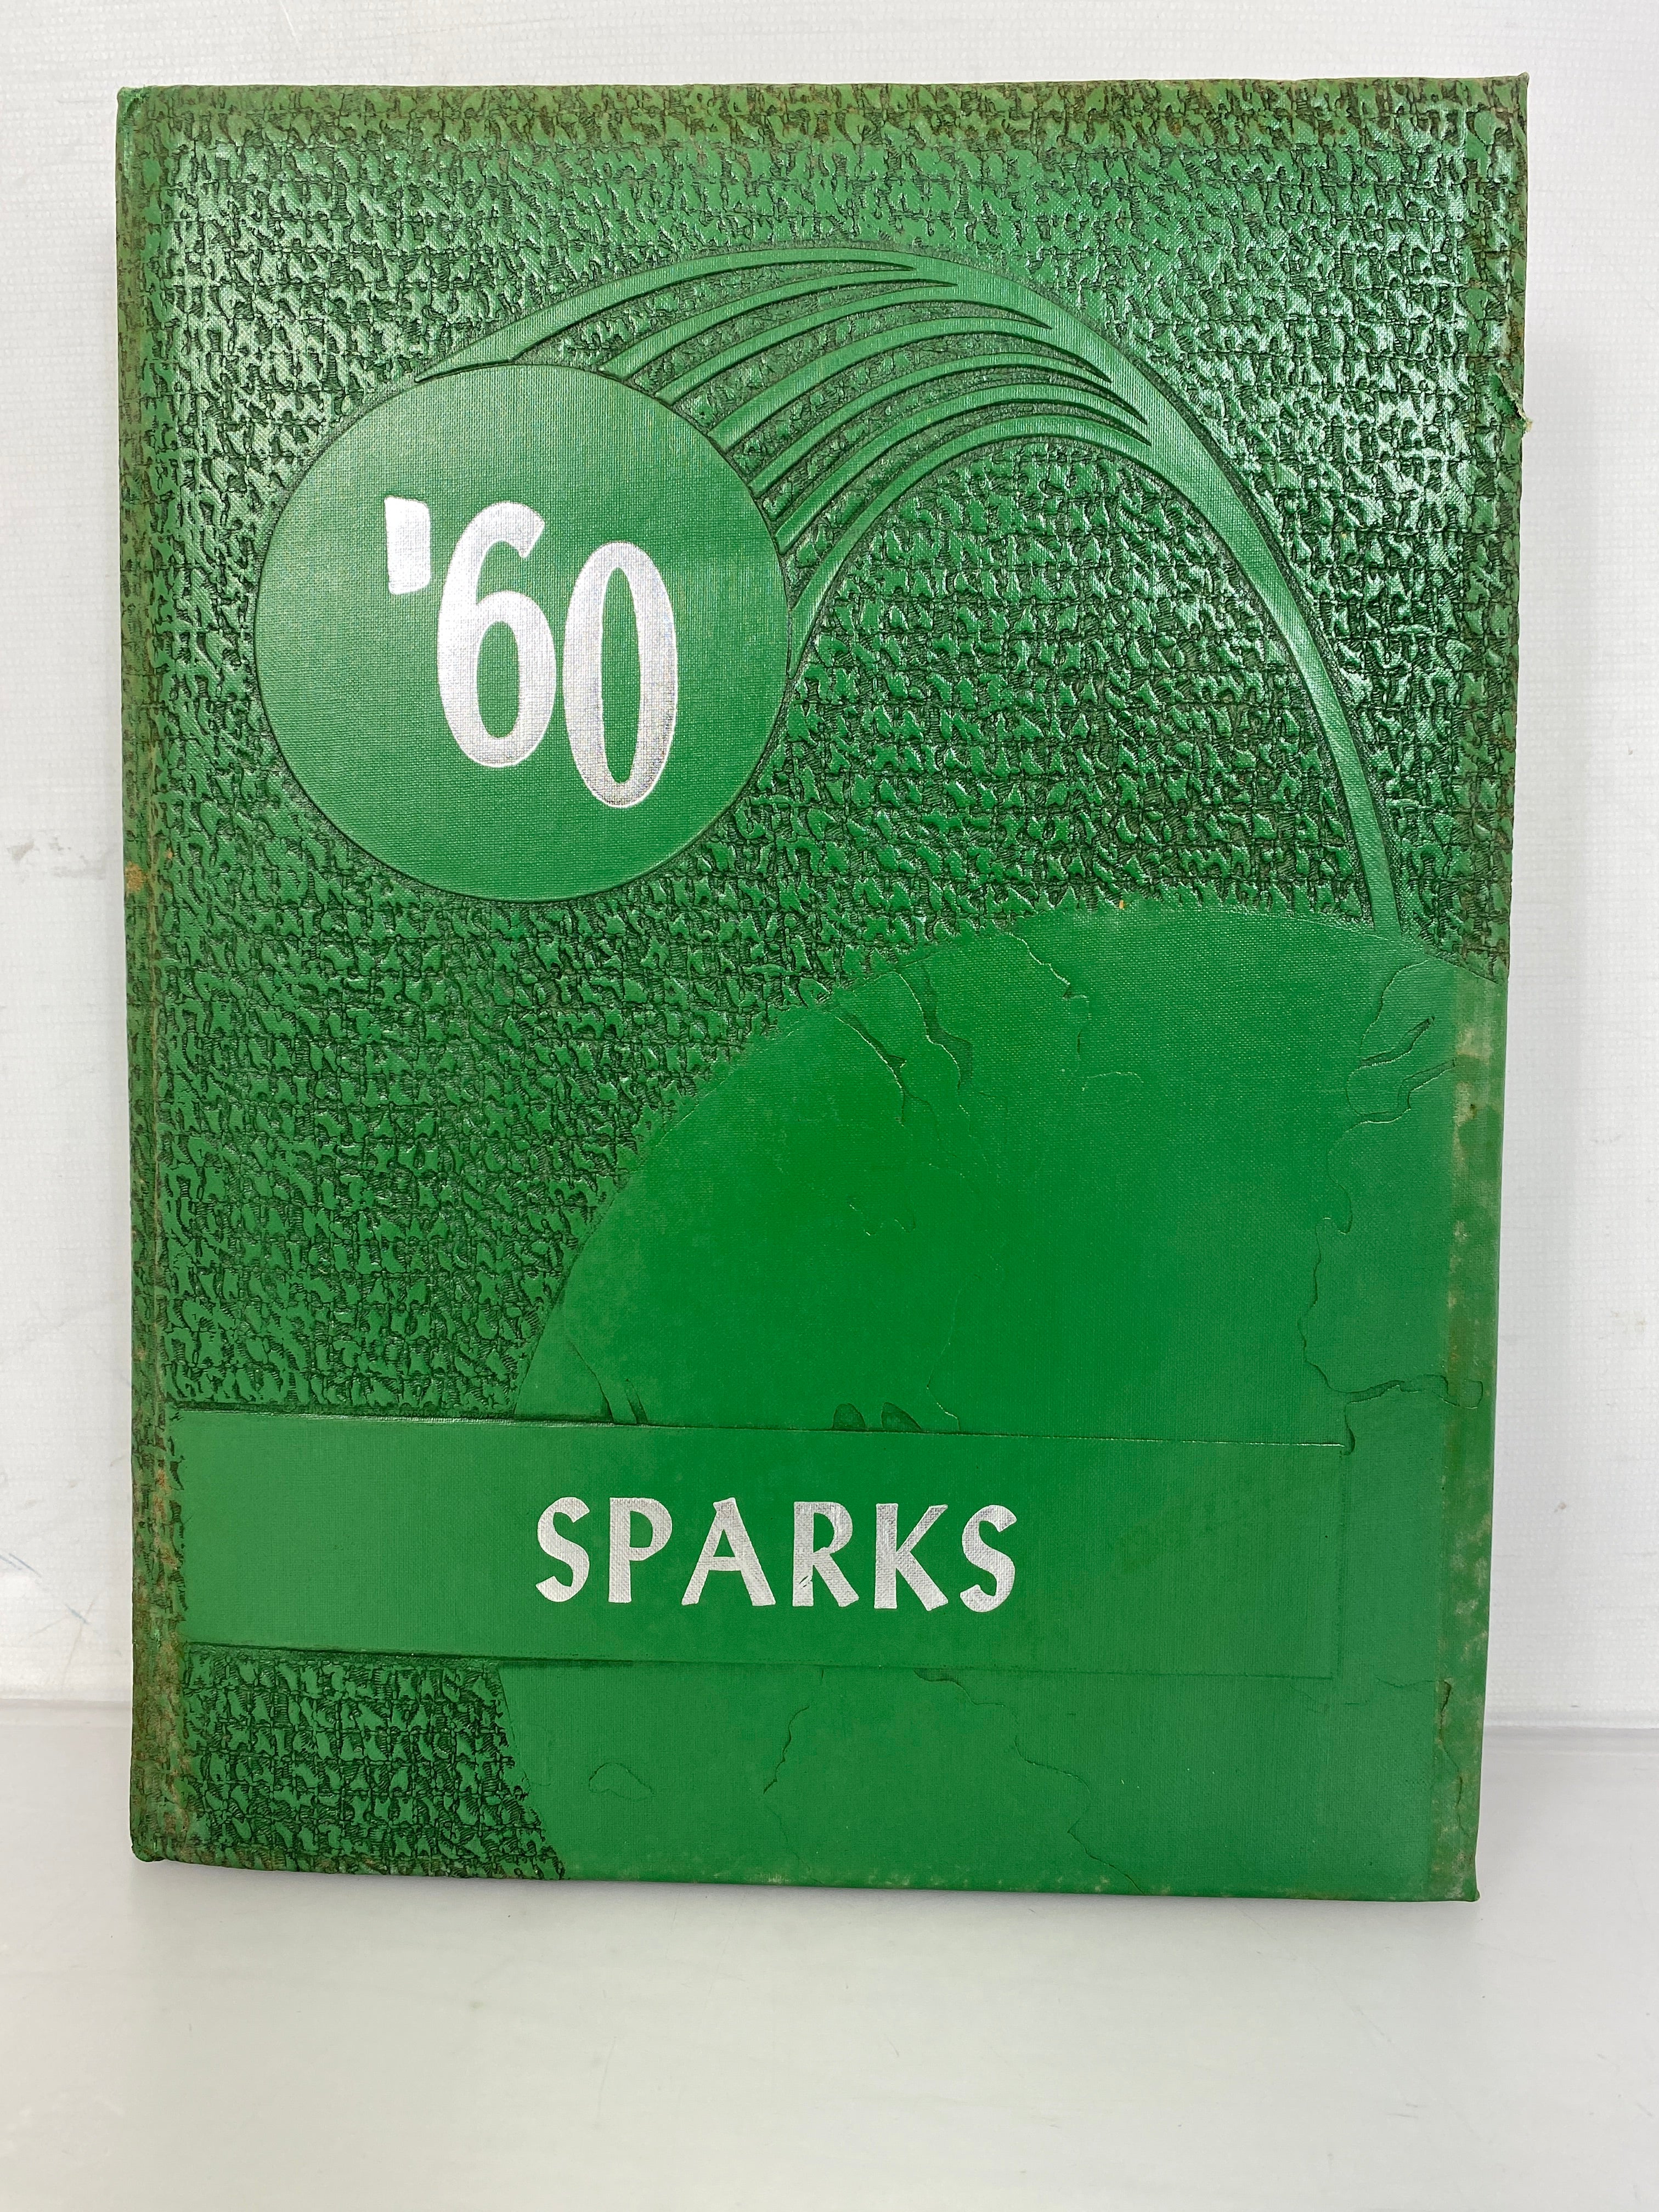 1960 Weedsport Junior-High School "Sparks" Weedsport New York